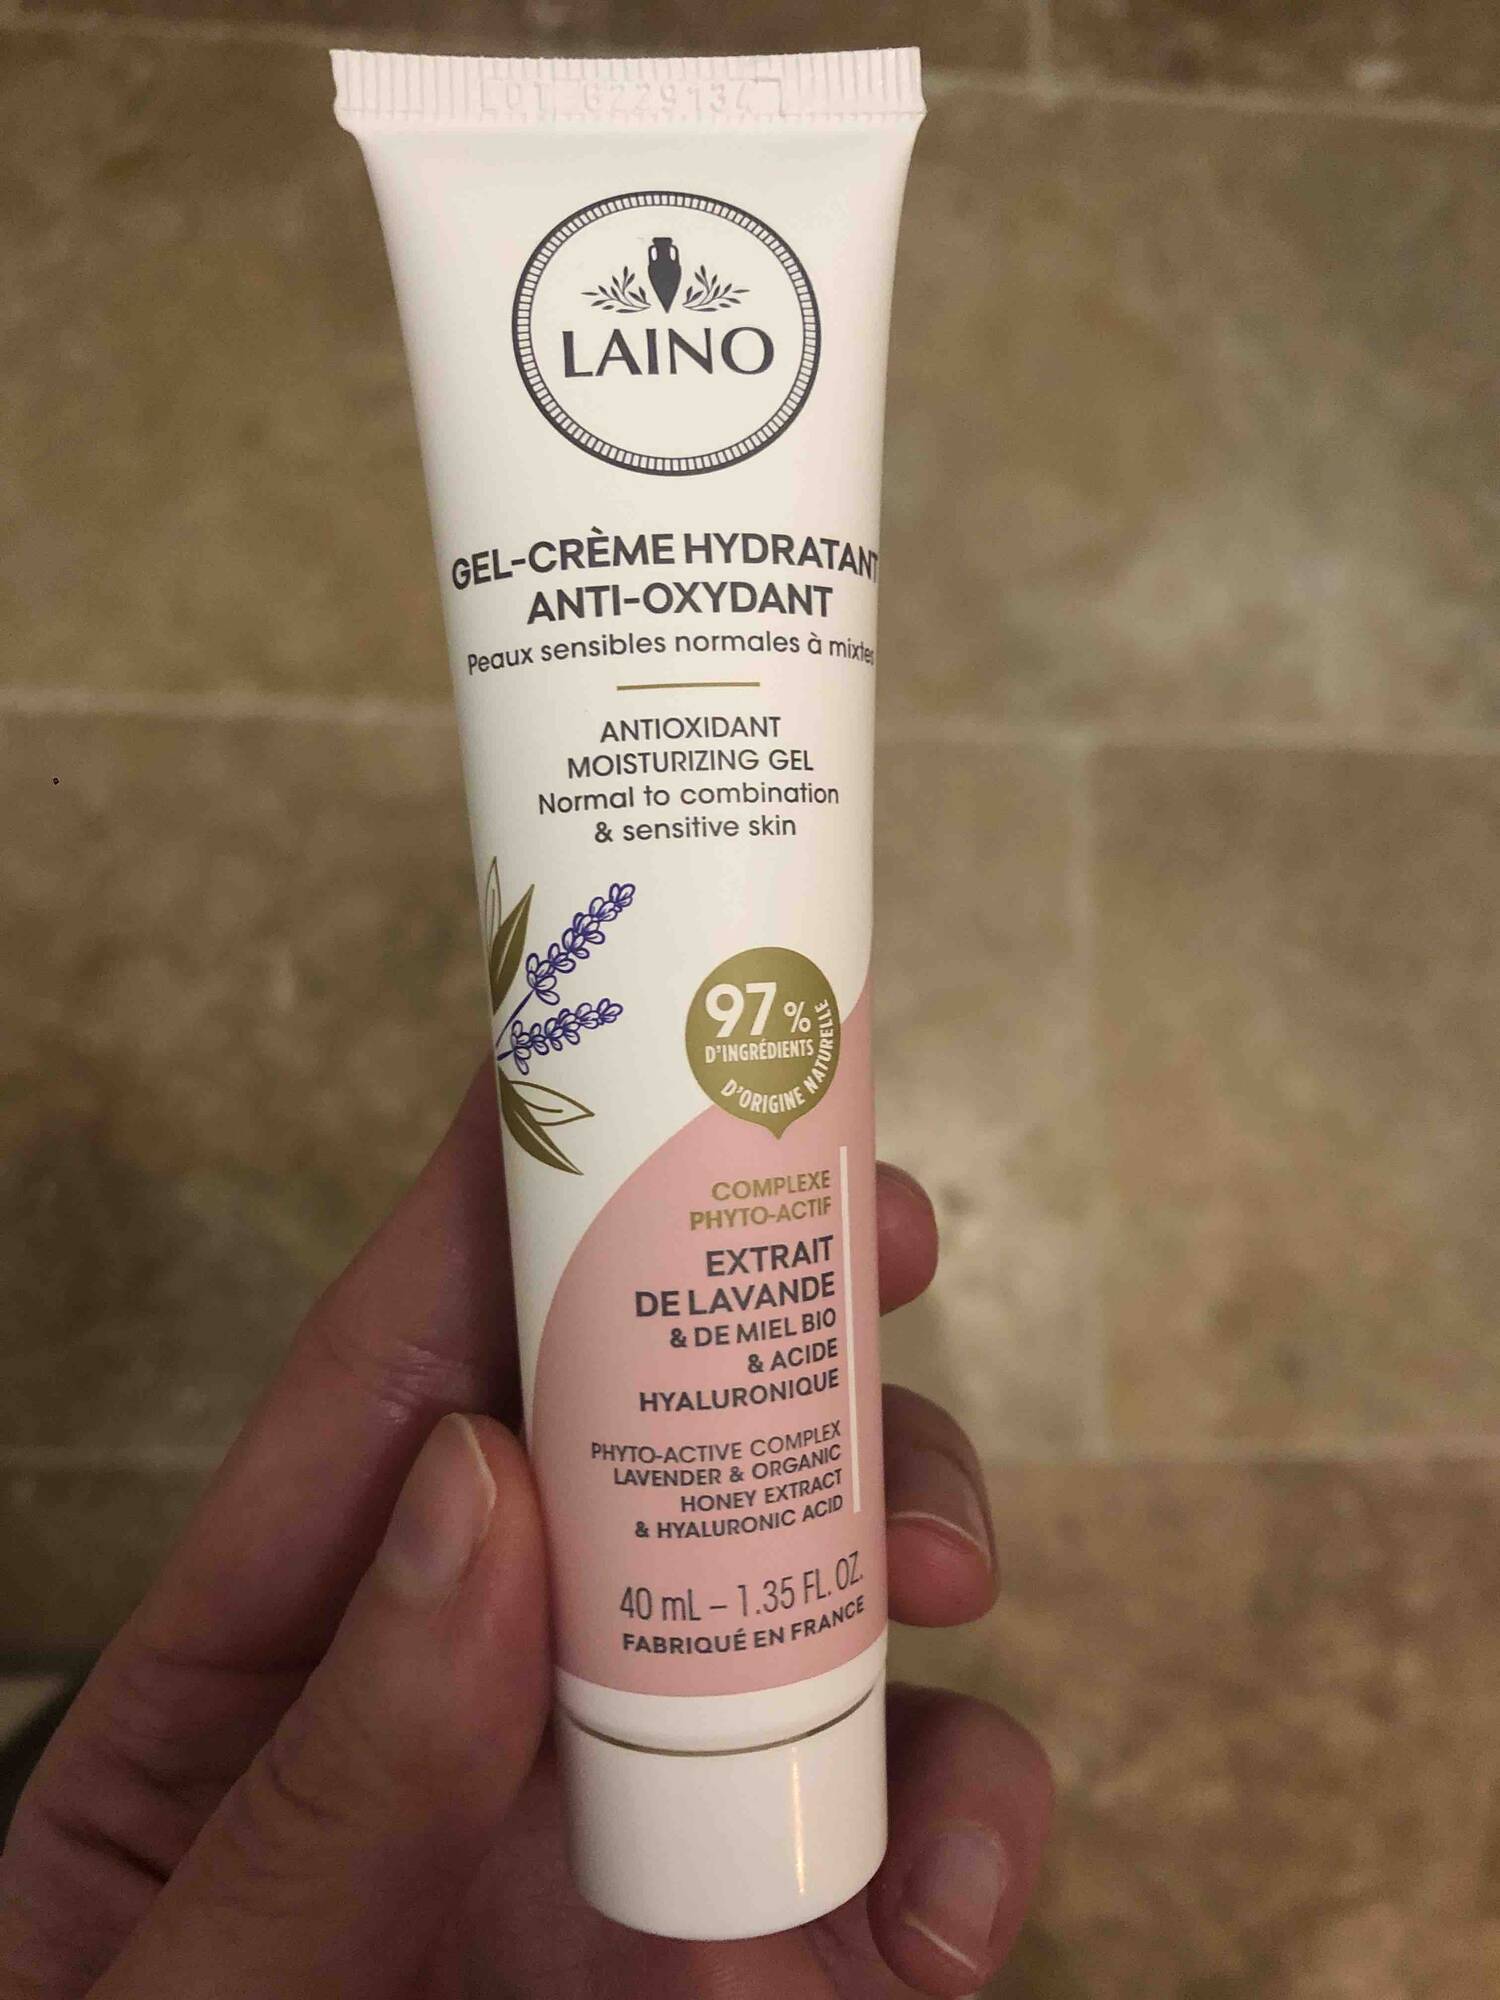 LAINO - Gel-crème hydratant anti-oxydant 